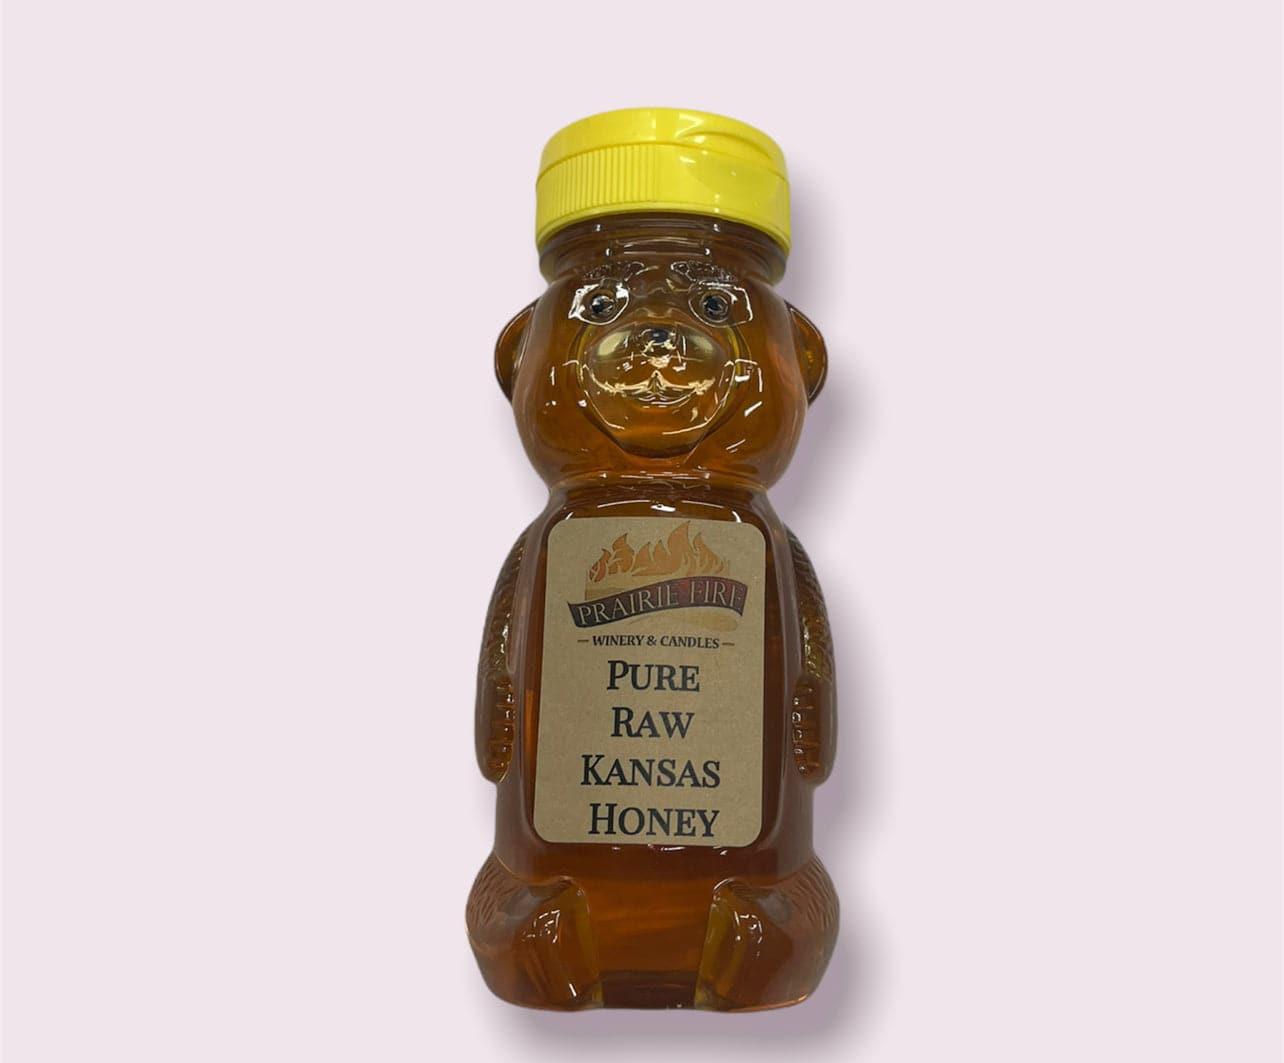 Honey - Pure Raw Kansas Honey 8 oz - Prairie Fire Candles